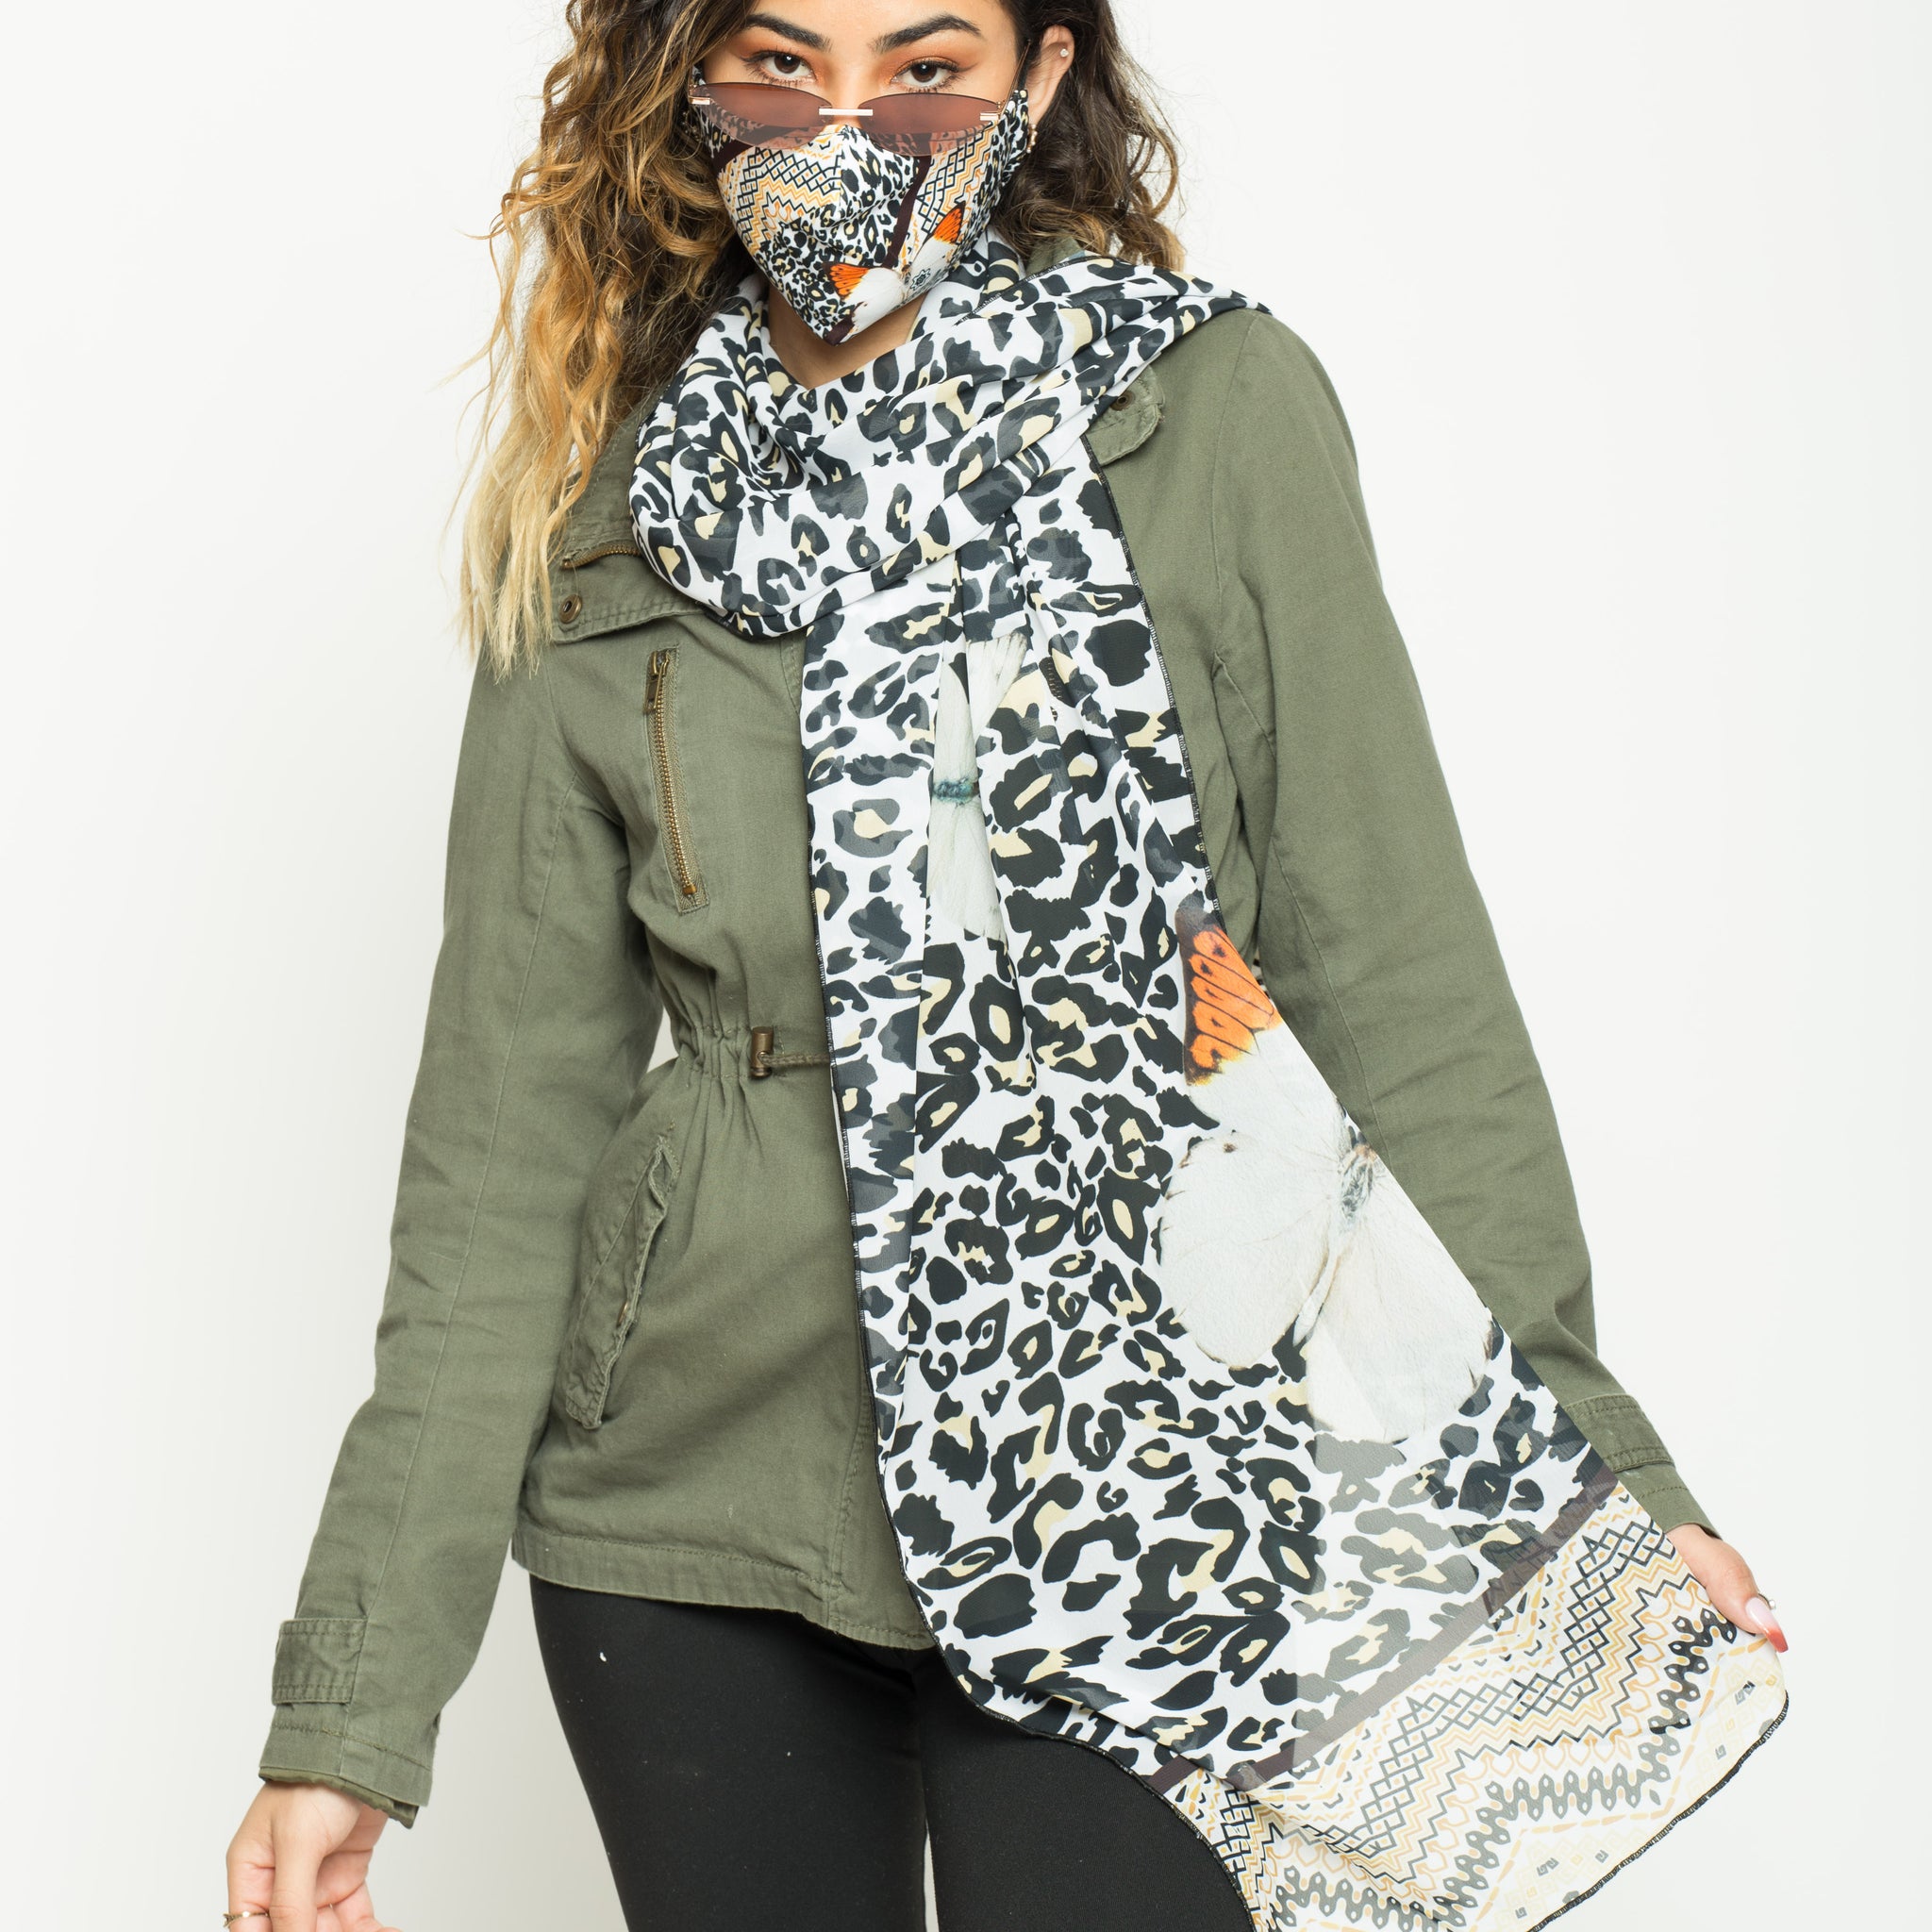 Cheetah Scarf - Escala Activewear